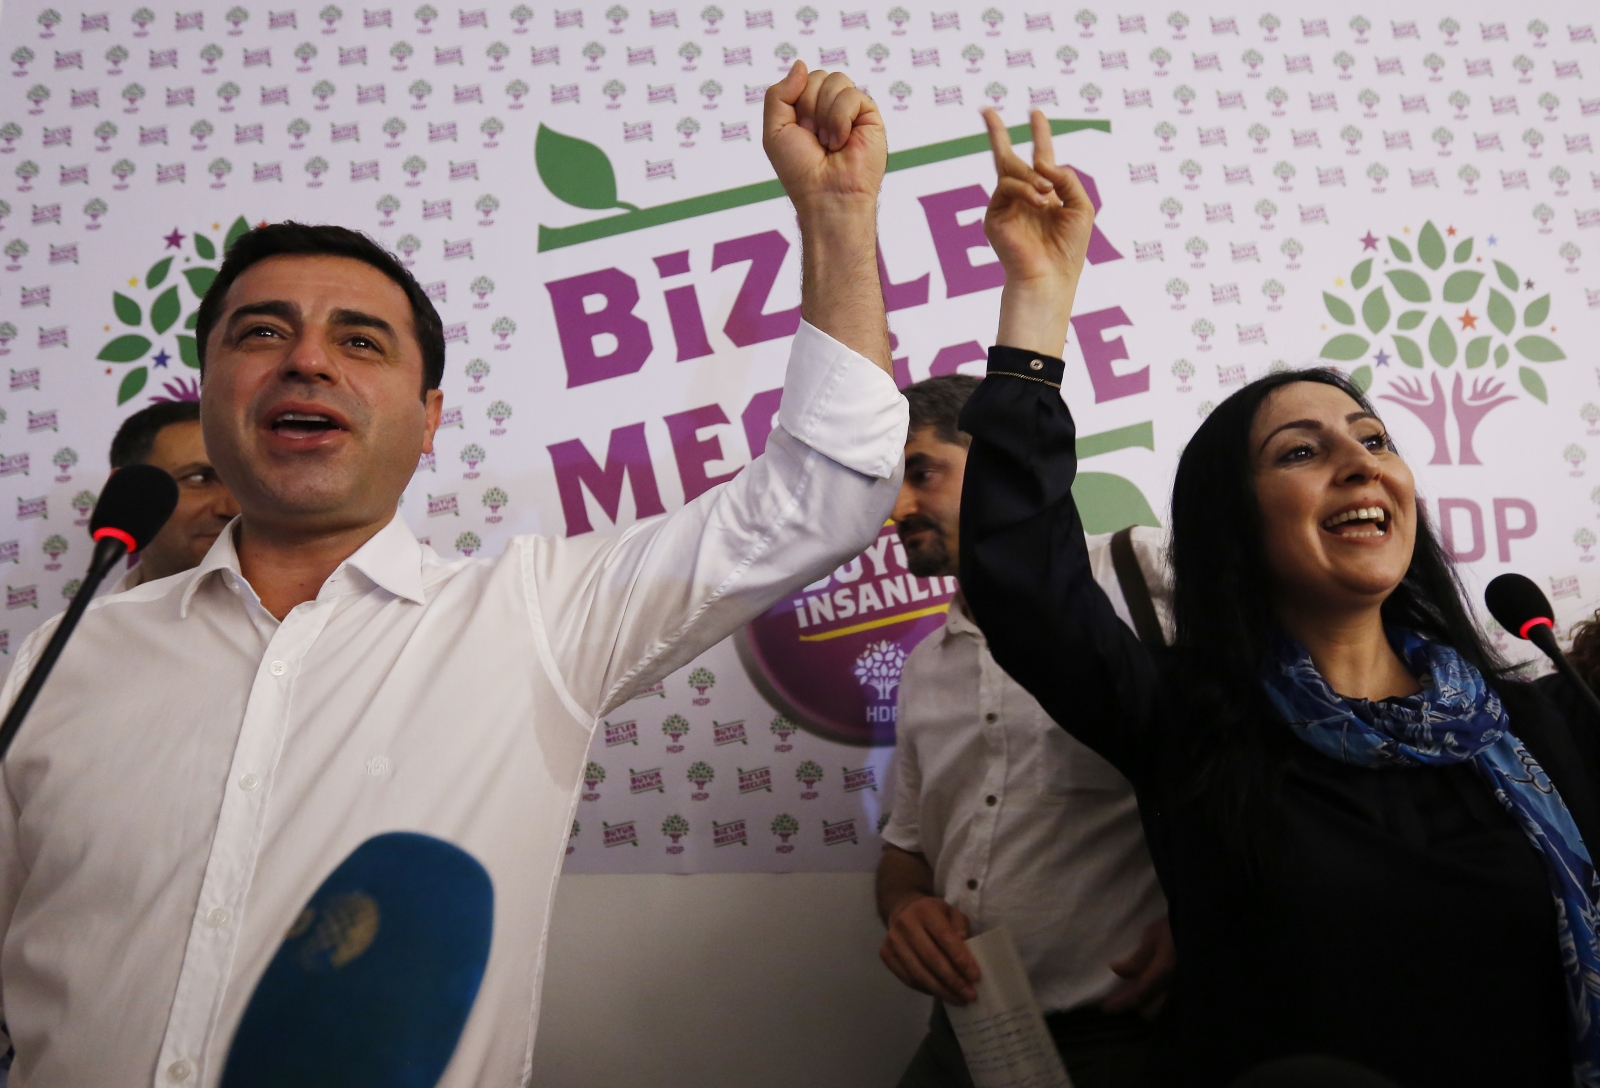 http://d.ibtimes.co.uk/en/full/1442567/hdp-leaders-turkey-elections.jpg